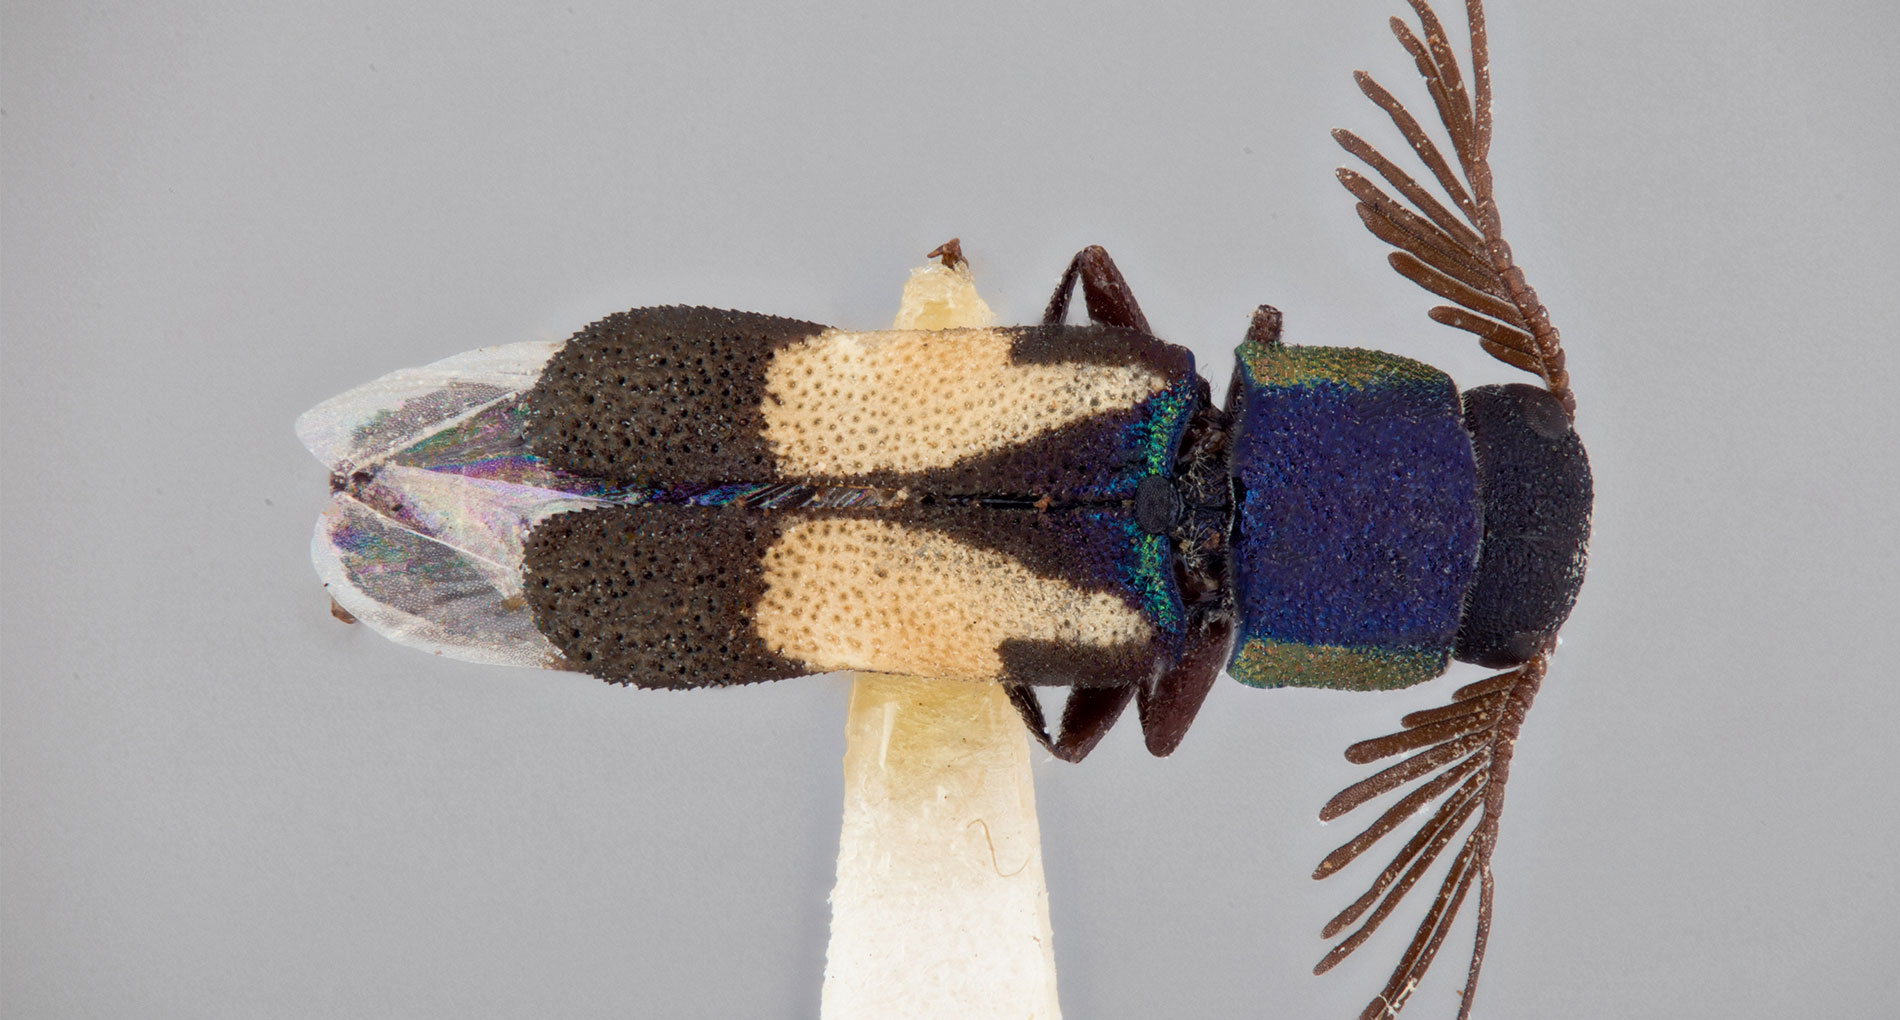 close-up image of a shiny green and bronze beetle-like bug